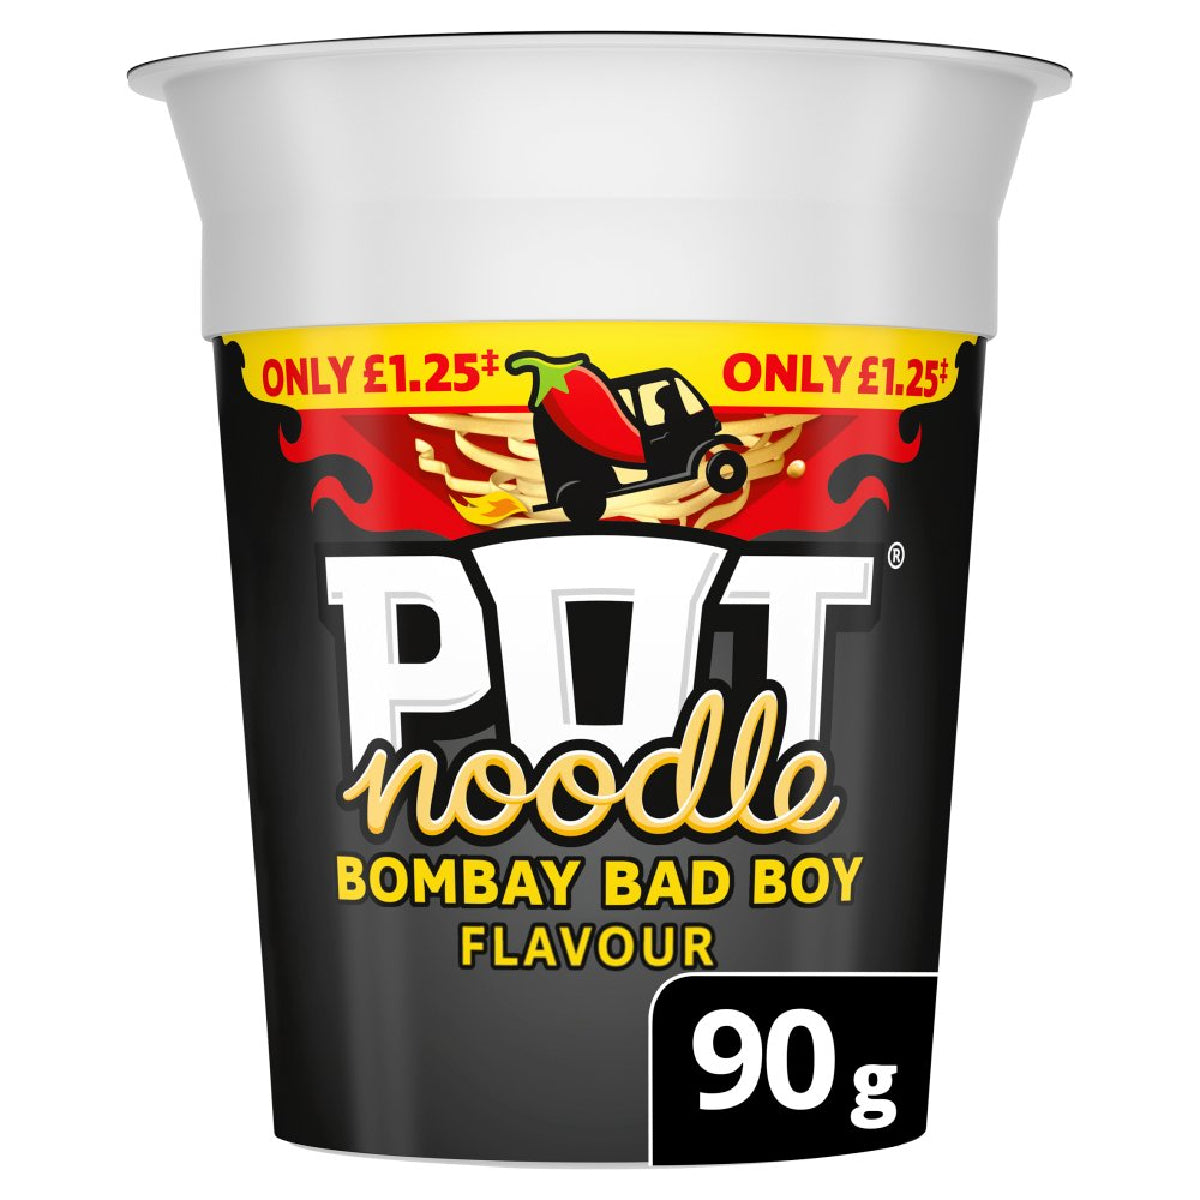 Pot Noodle - Bombay Bad Boy Flavour - 90g - Continental Food Store